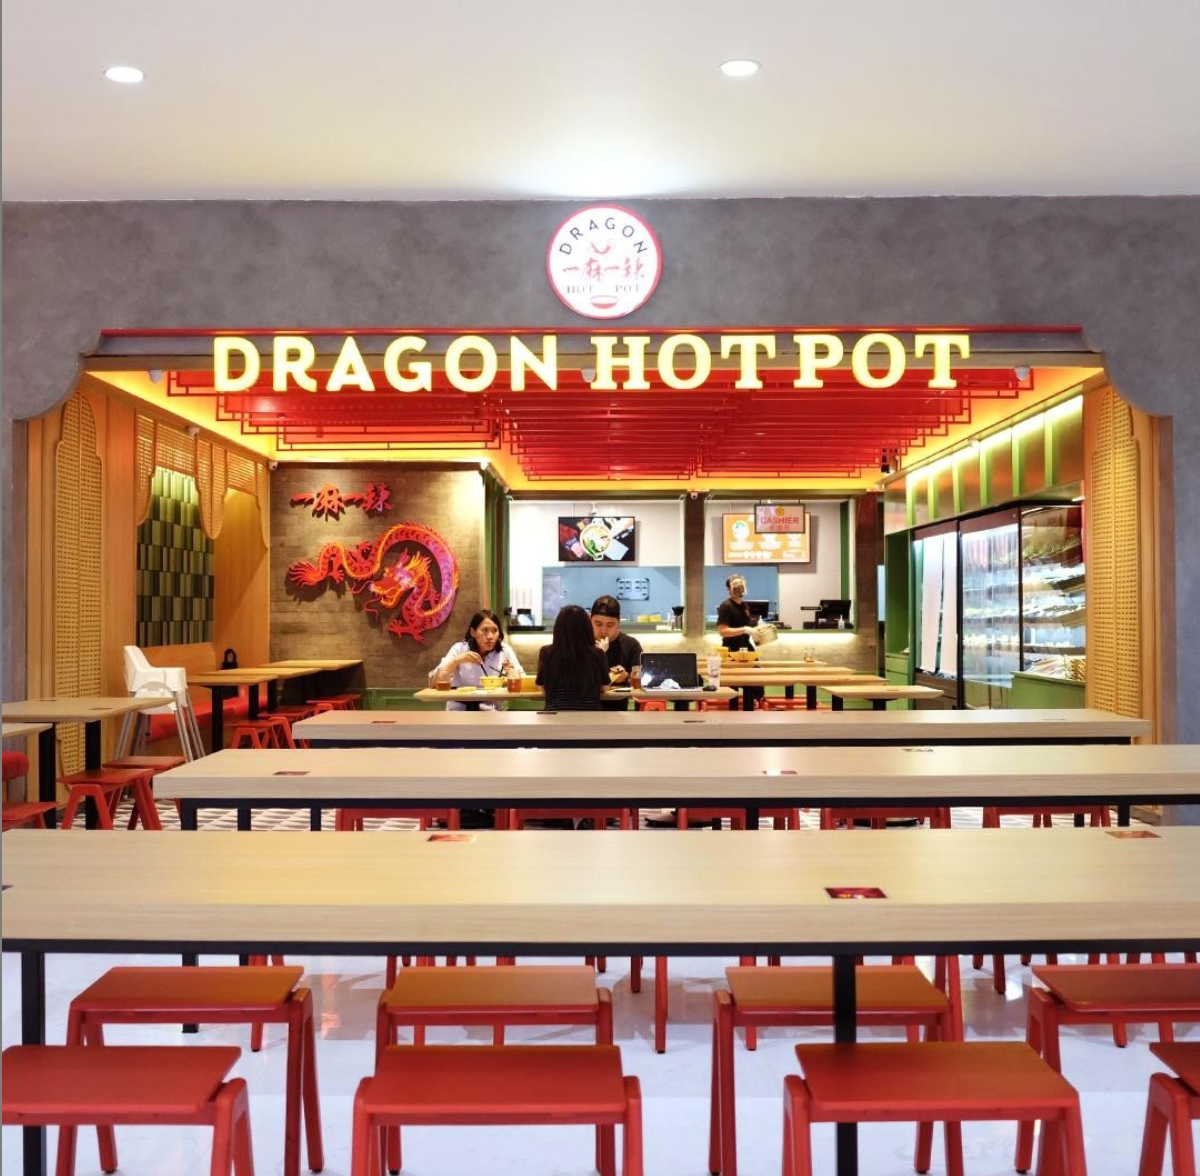 Dragon Hot Pot shop front in lippo mall puri st. moritz